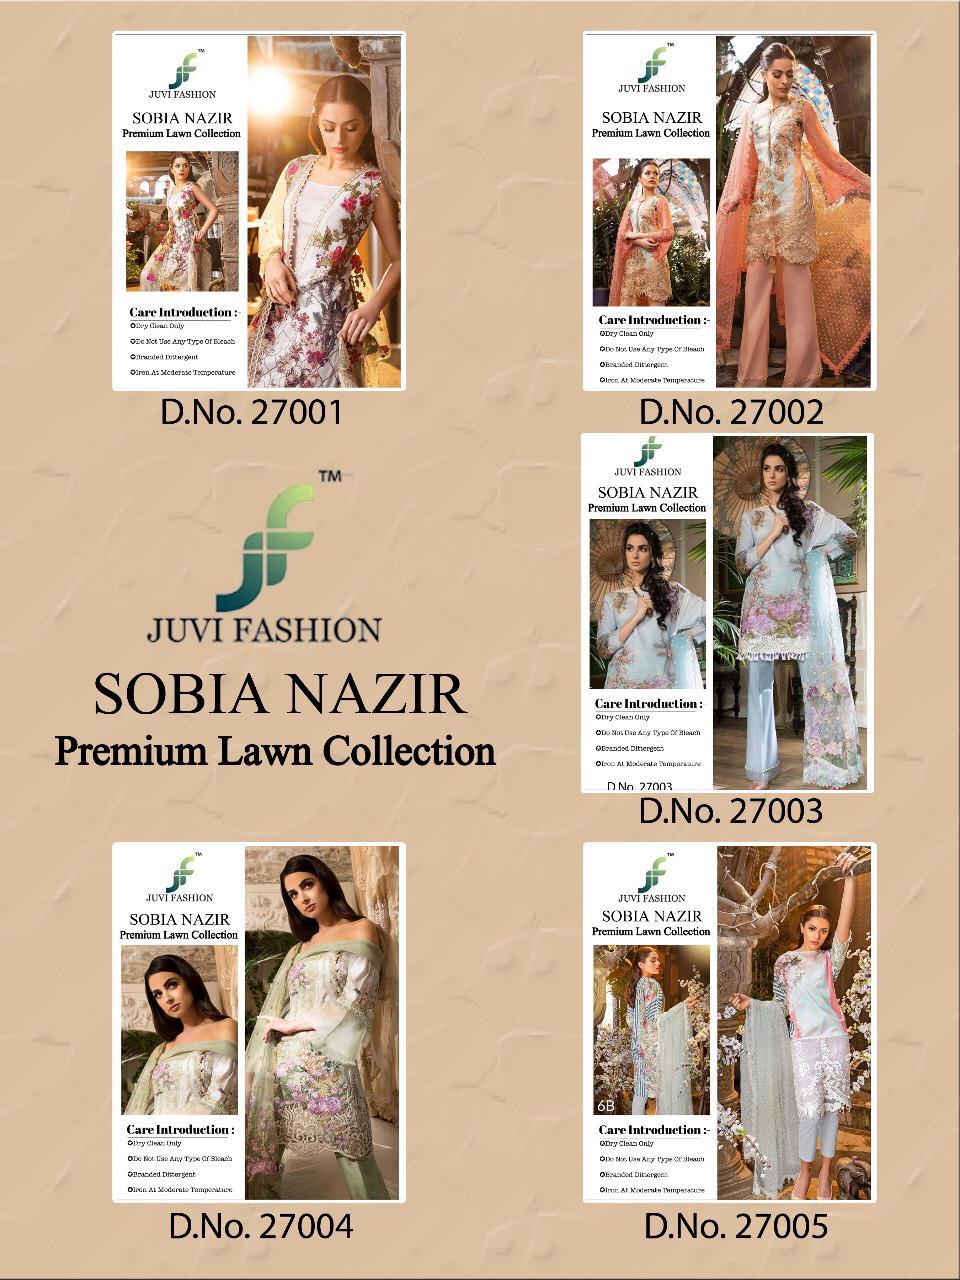 JUVI fashion presenting sOBIA NAZIR premium lawn collection beautifulsalwar kameez concept